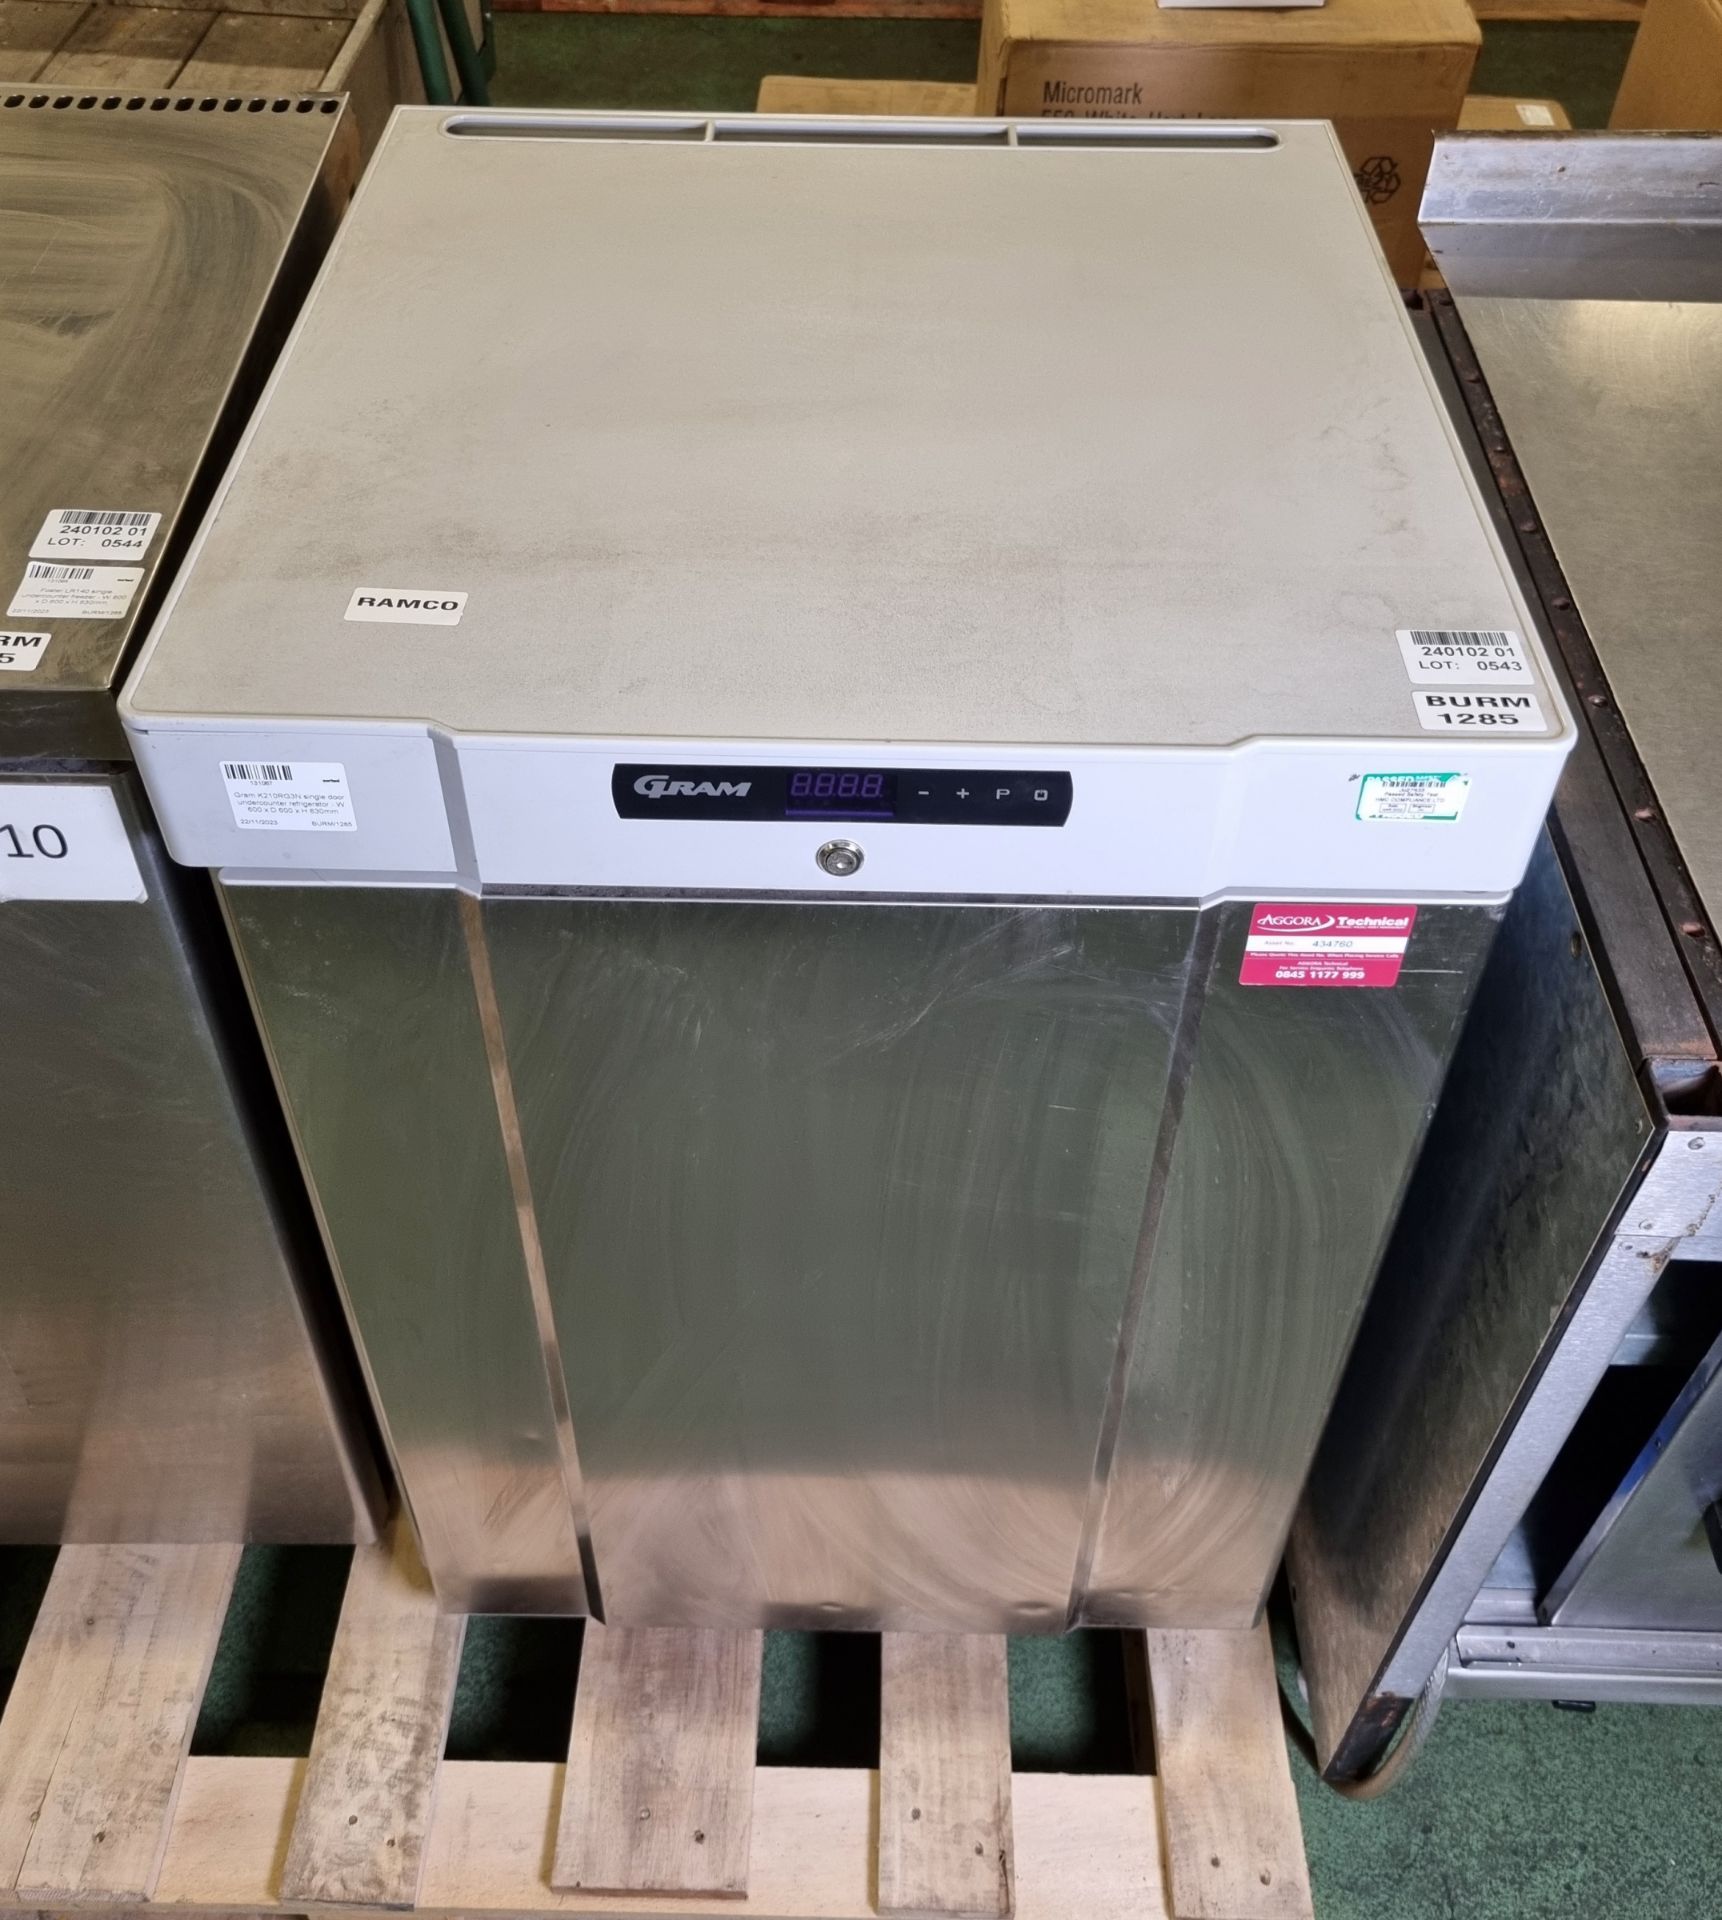 Gram K210RG3N single door undercounter refrigerator - W 600 x D 600 x H 830mm - Image 2 of 4